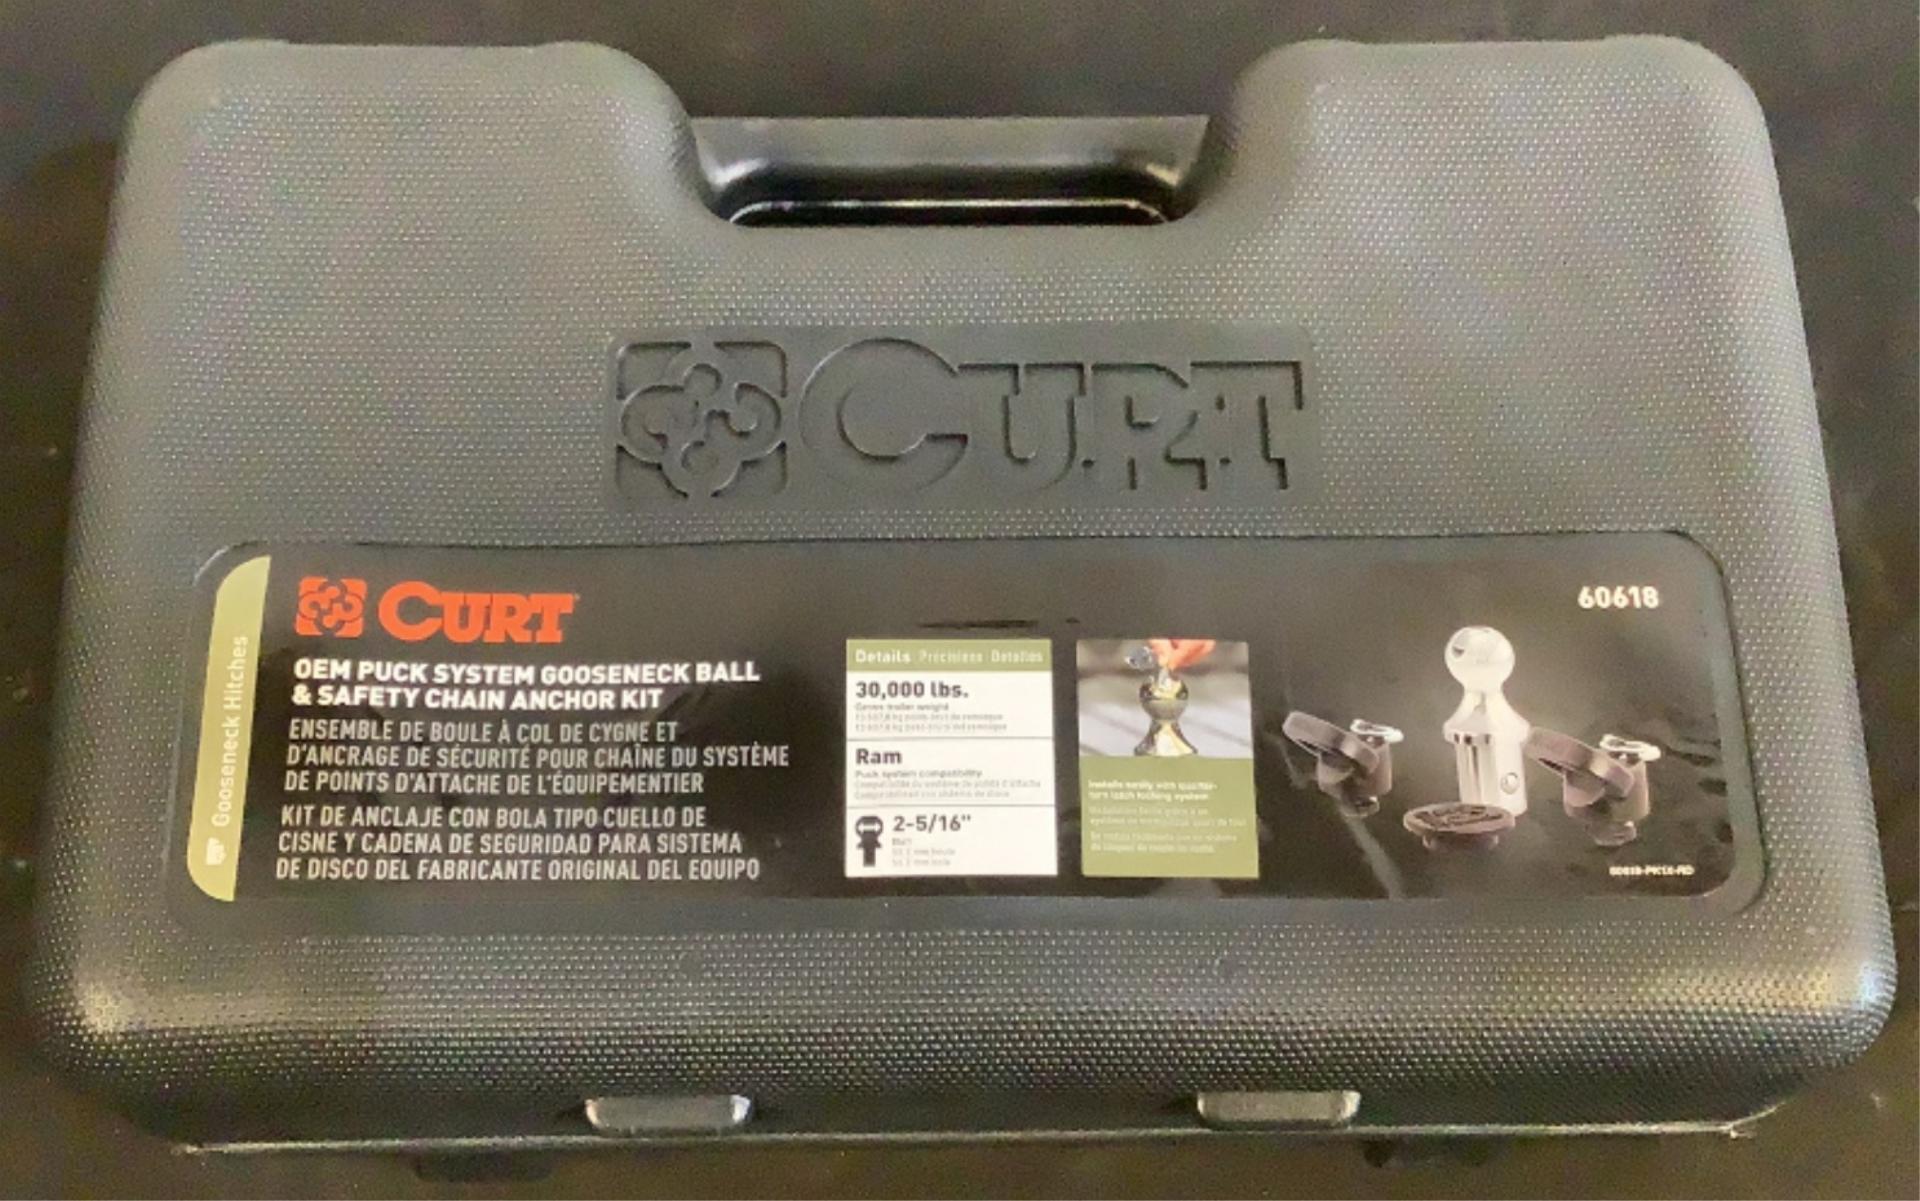 Curt 2-5/16" Gooseneck Kit 60618